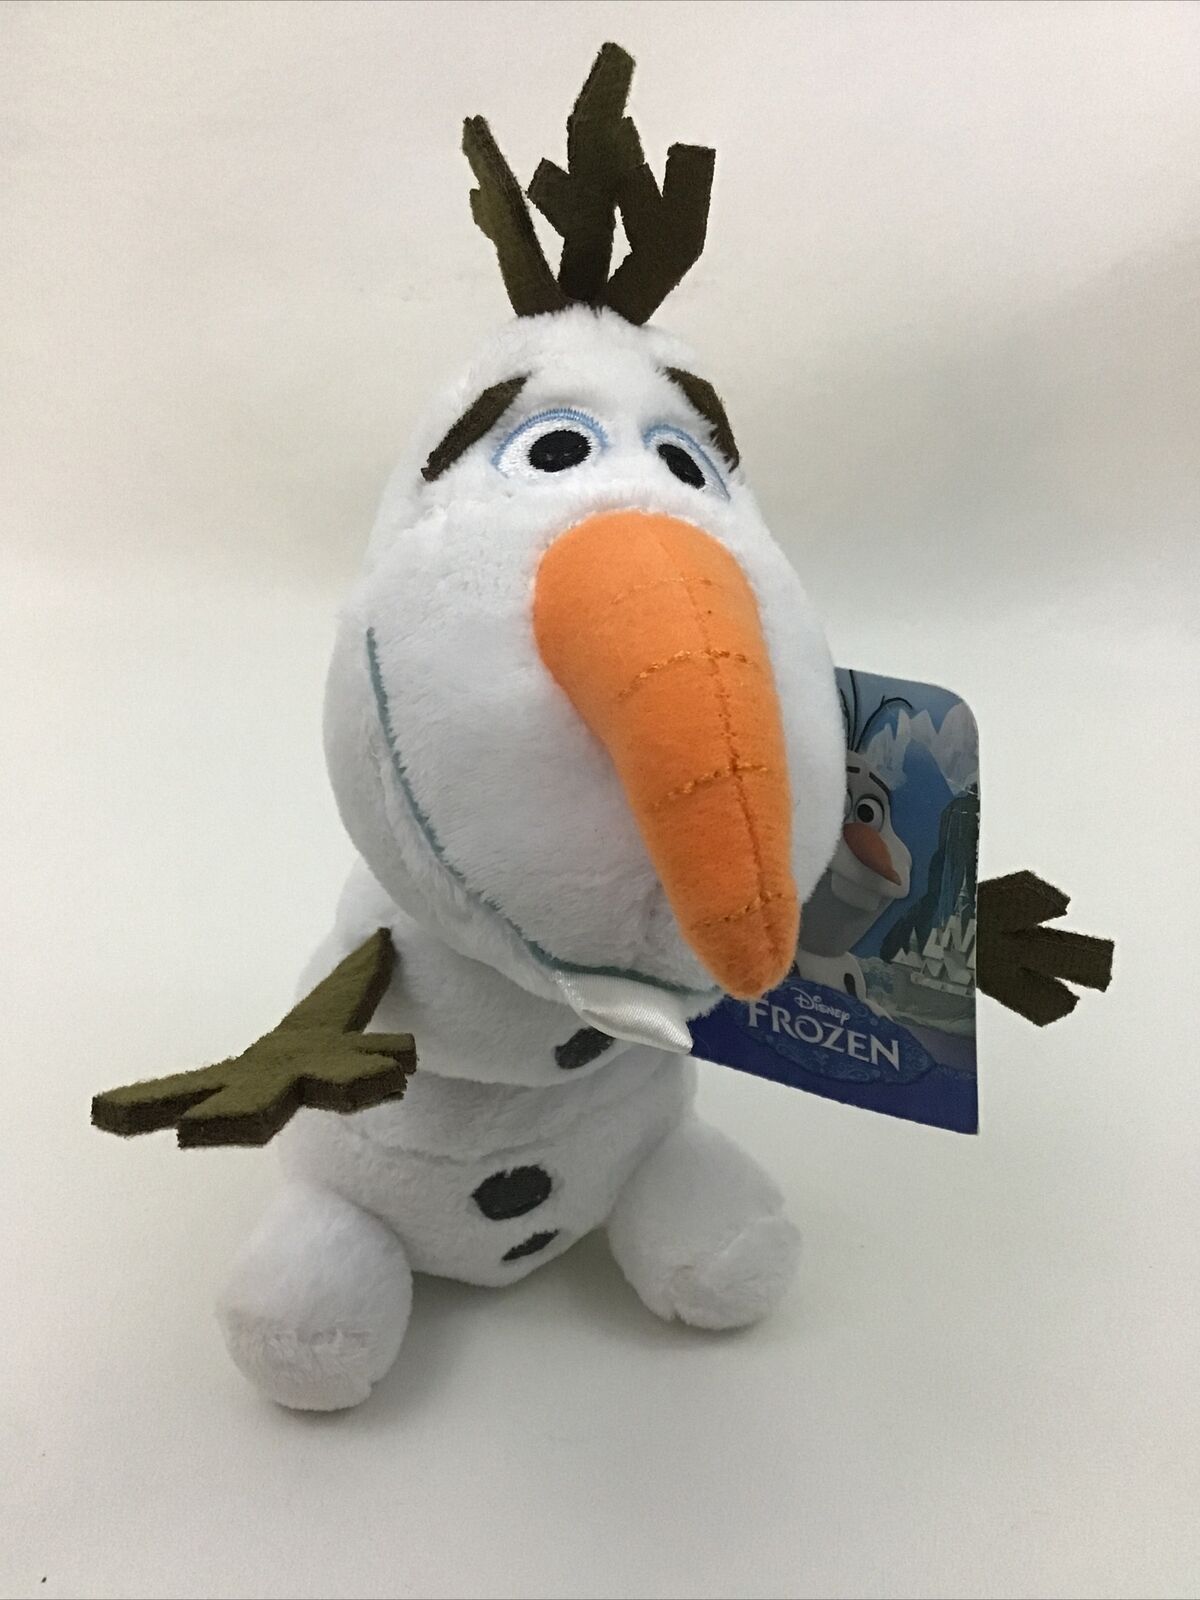 Disney Frozen Olaf the Snowman 6” Stuffed Plush With Clip on by Dan Dee 2014 NWT